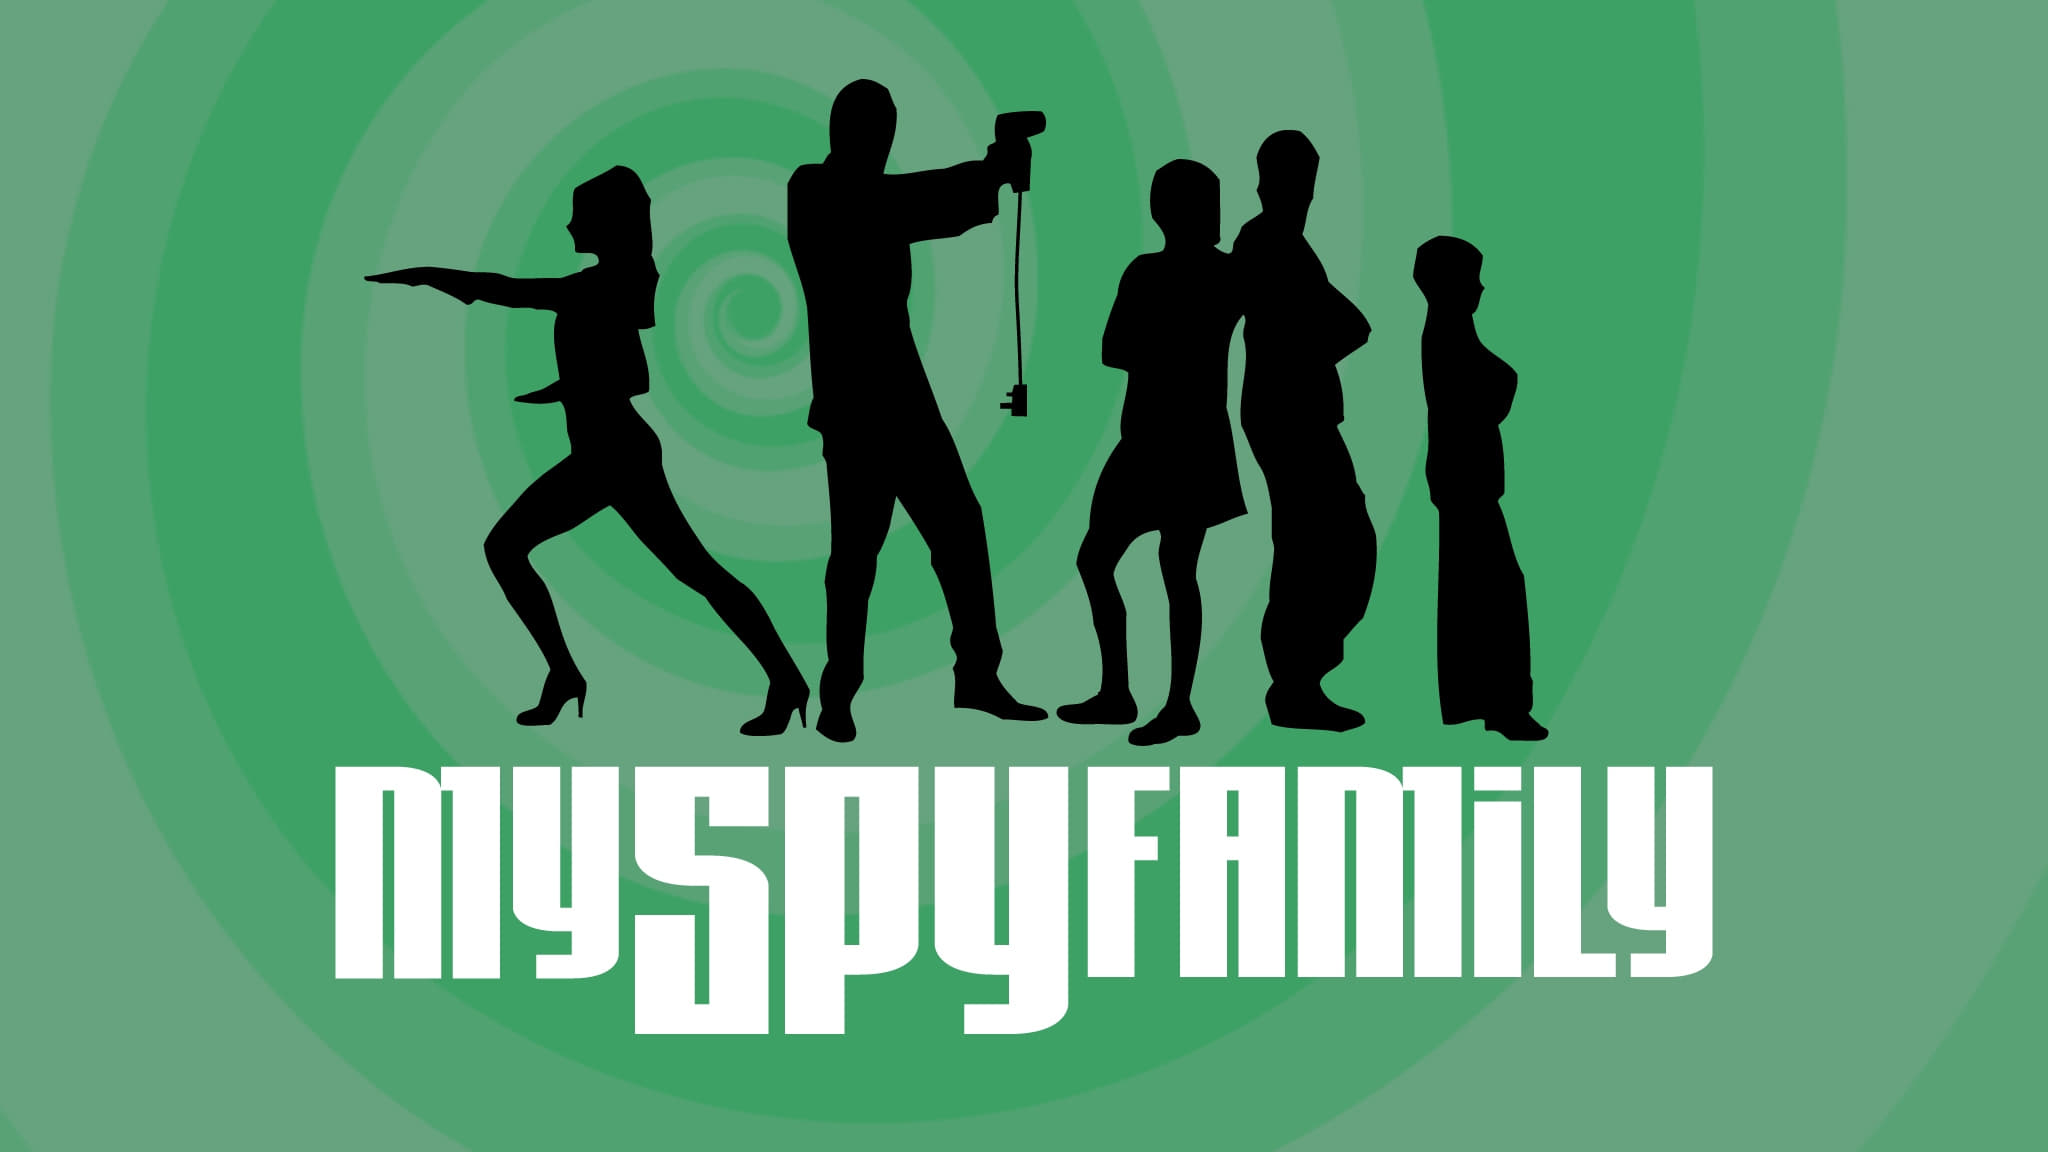 My Spy Family